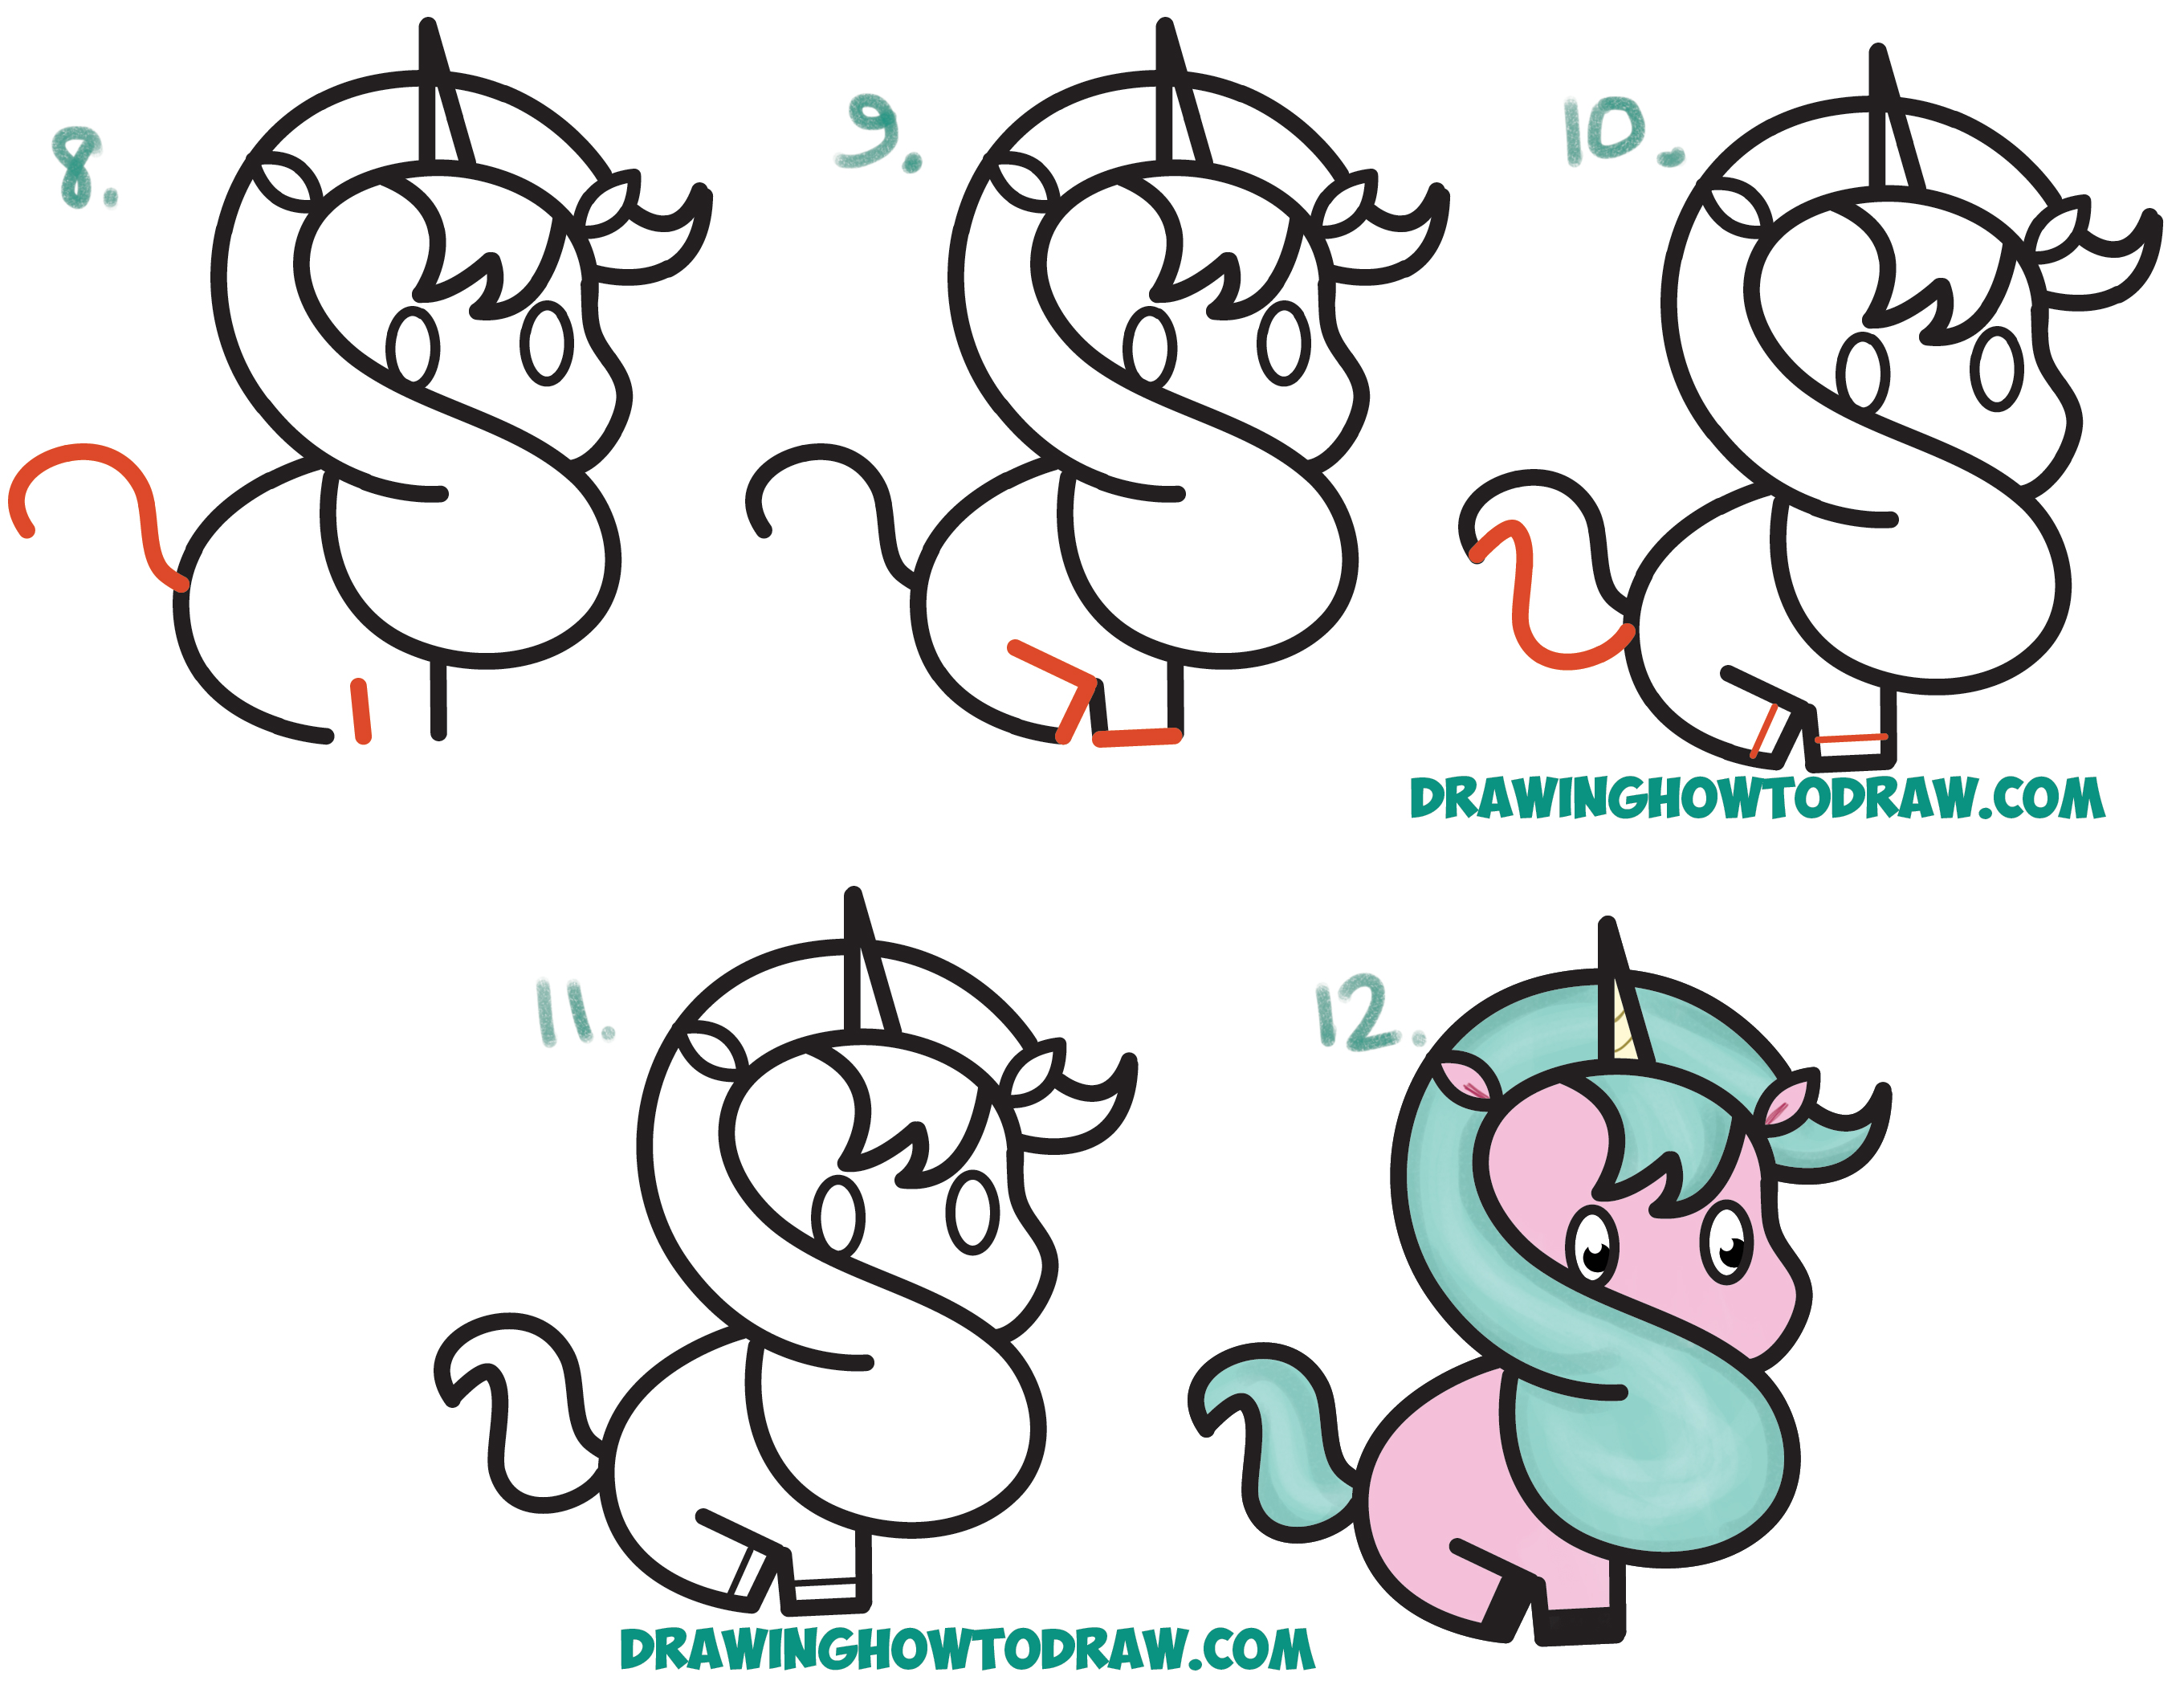 How To Draw A Cute Cartoon Unicorn Kawaii From A Dollar Sign